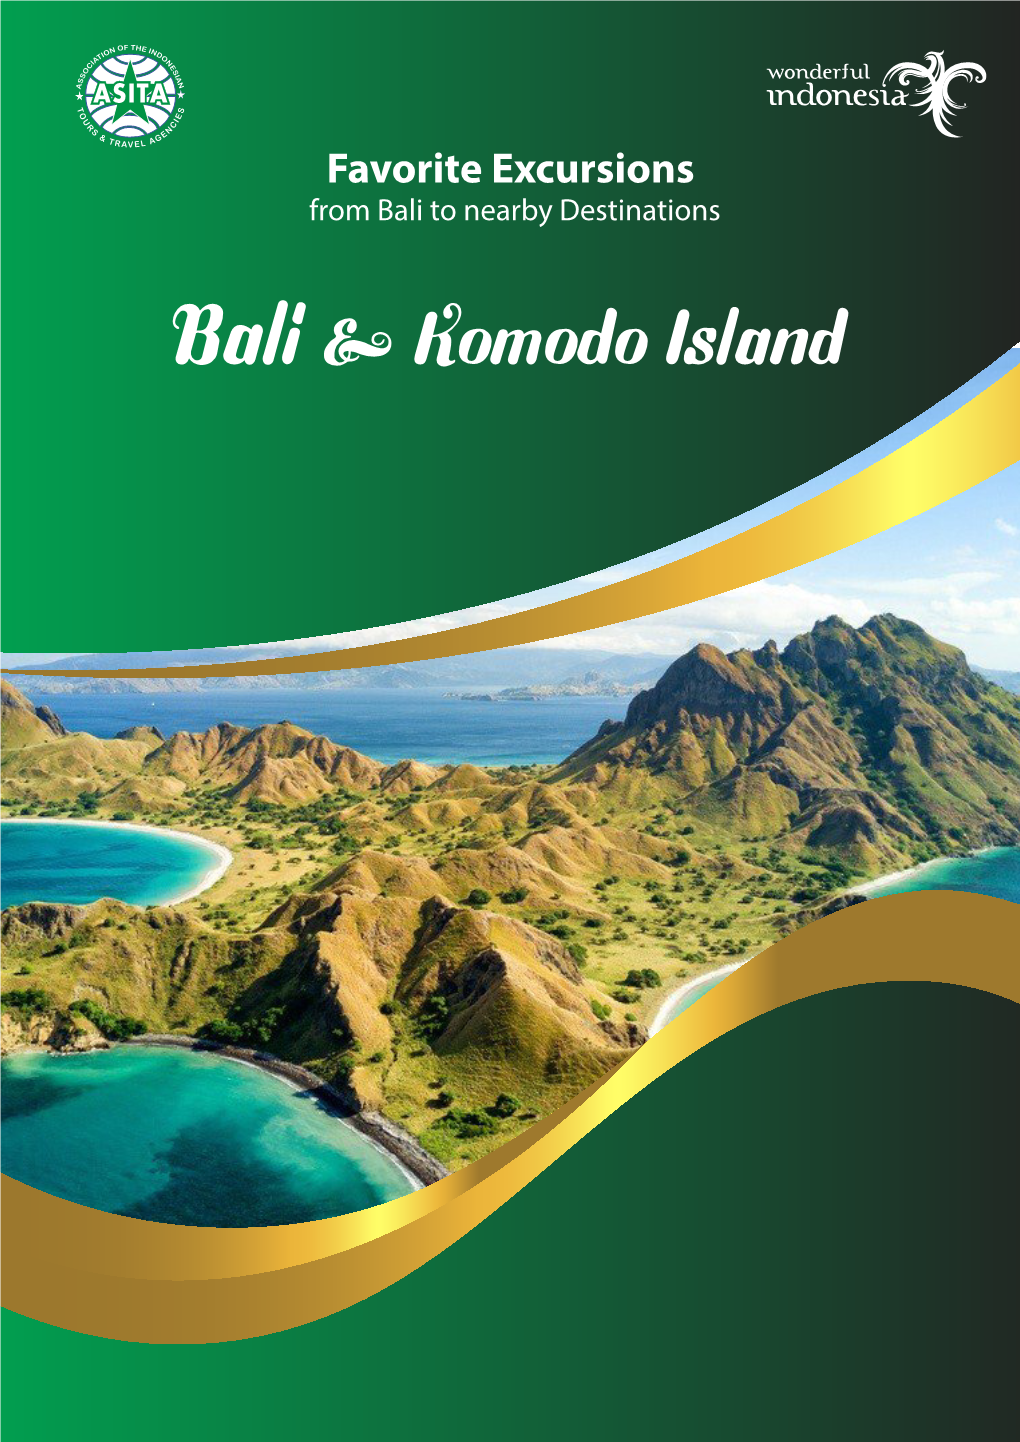 Bali & Komodo Island